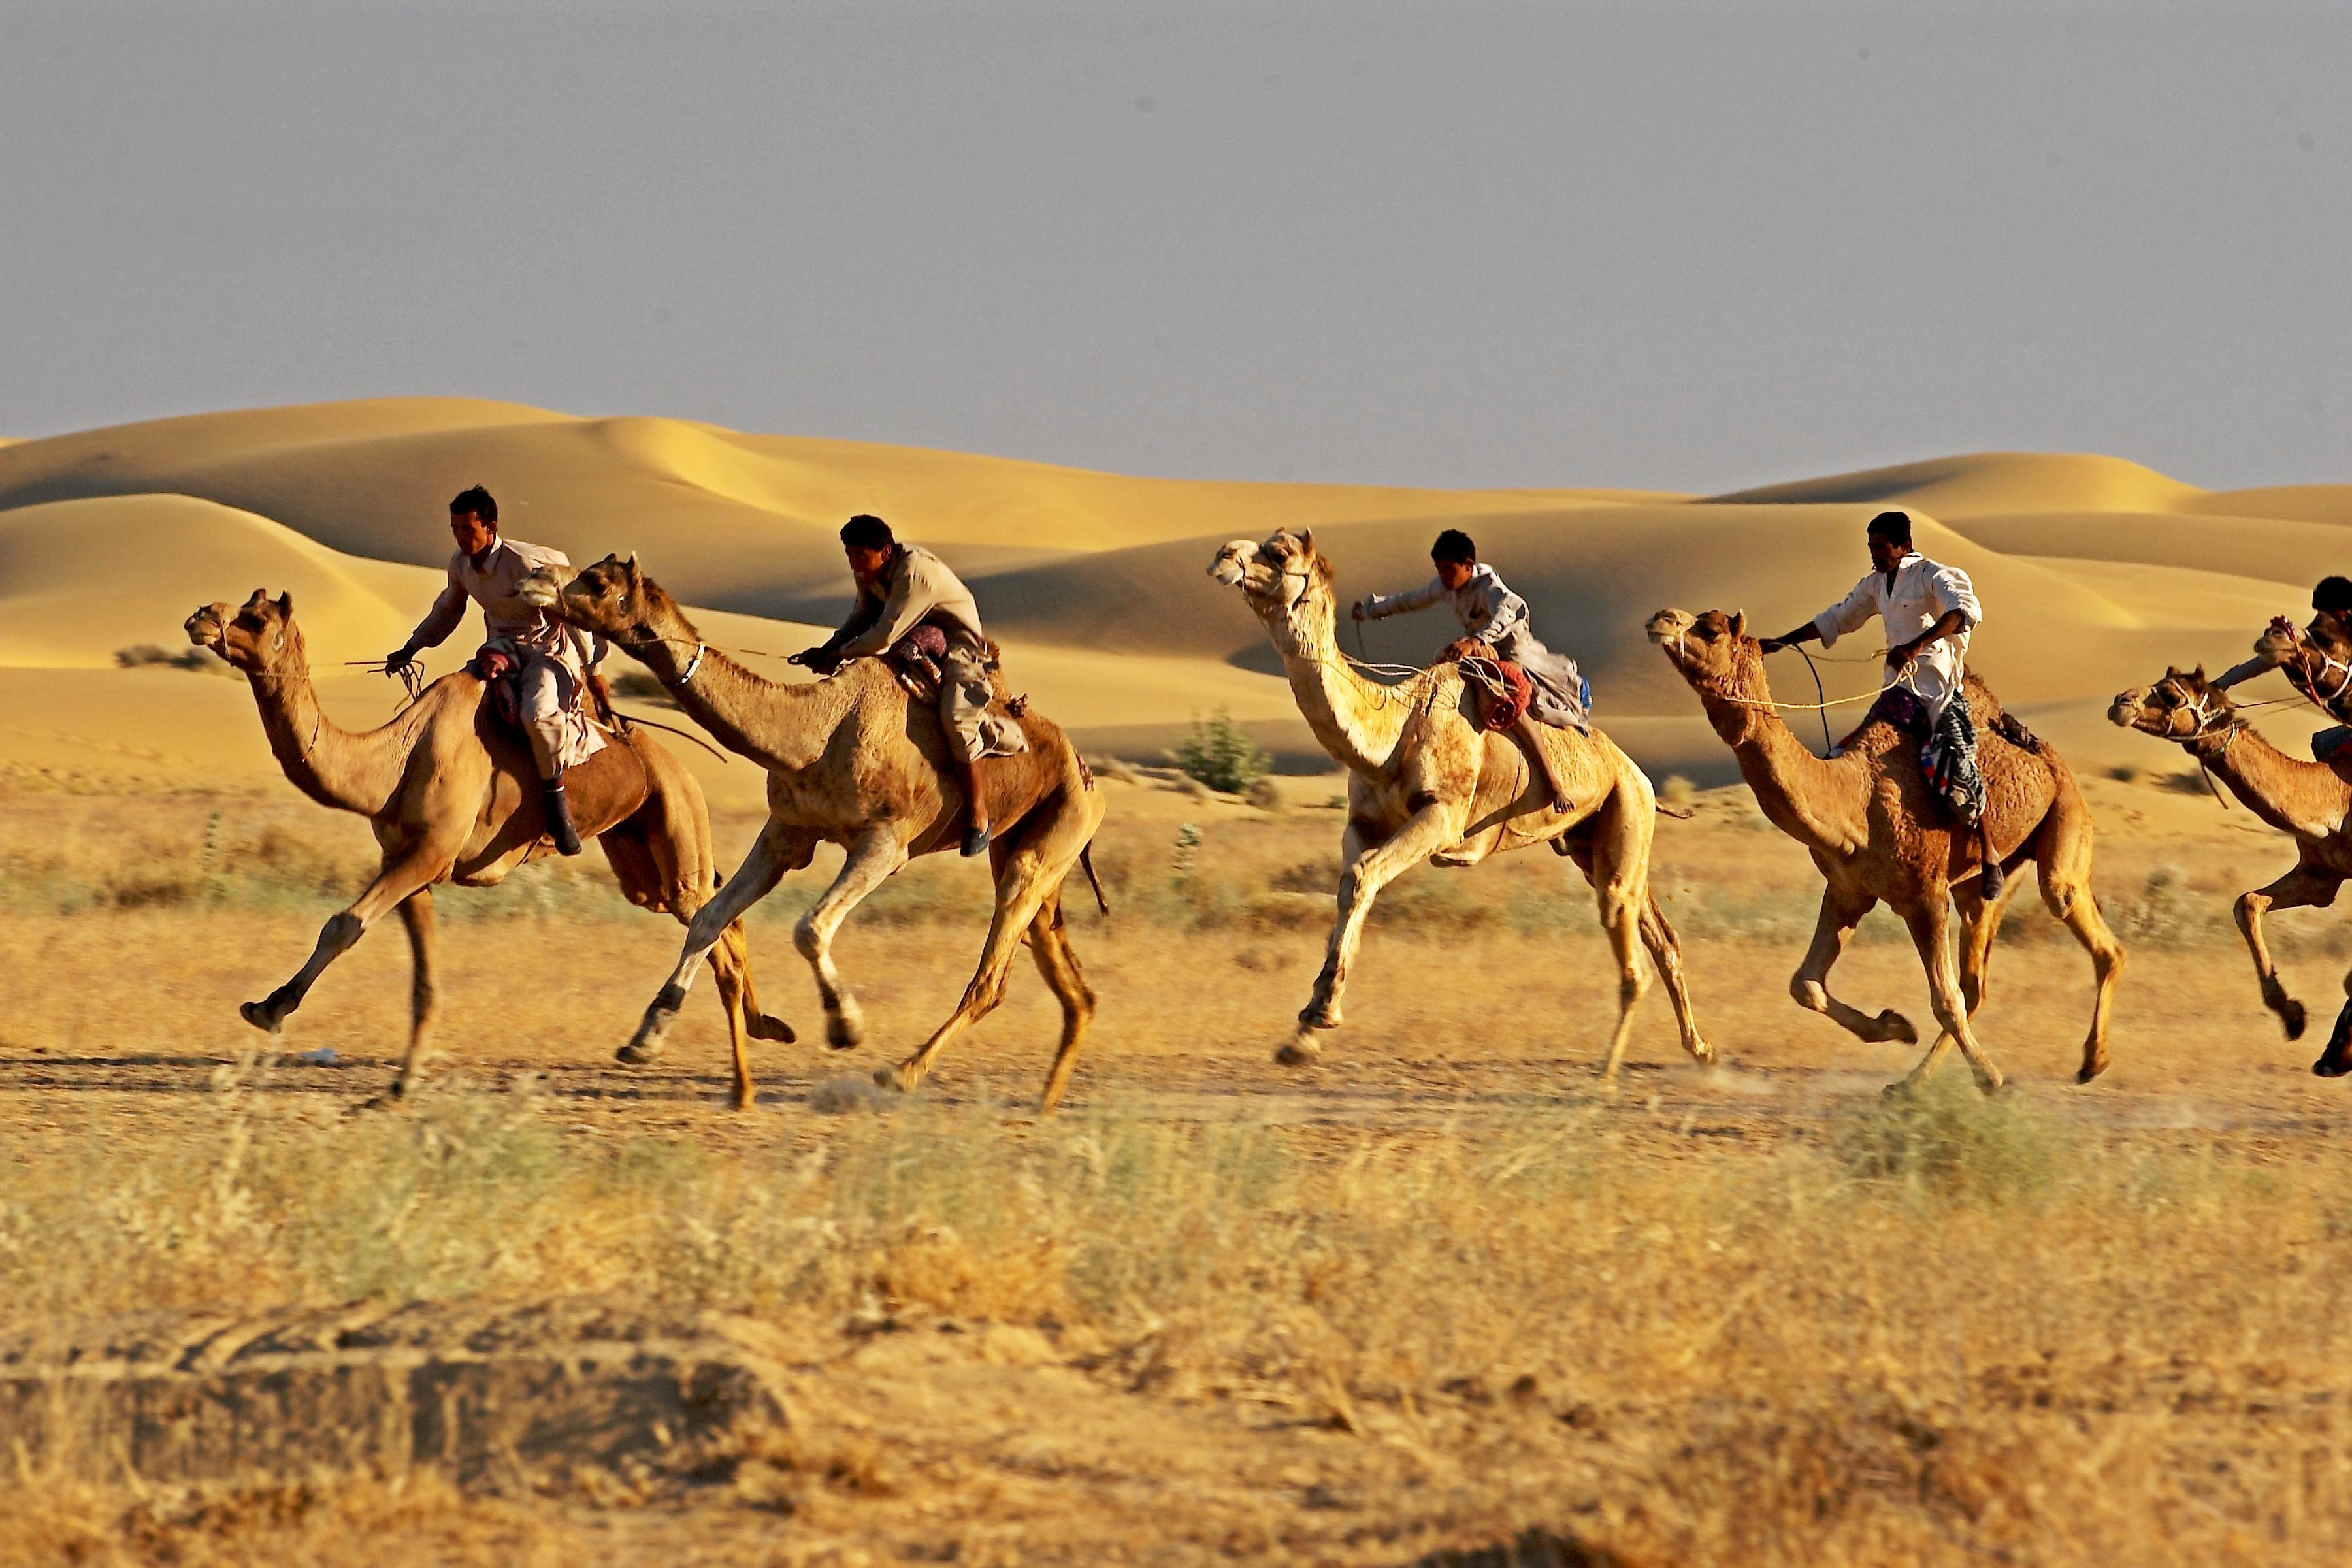 Golden Triangle Tour with Desert Festival Jaisalmer, Indian Golden